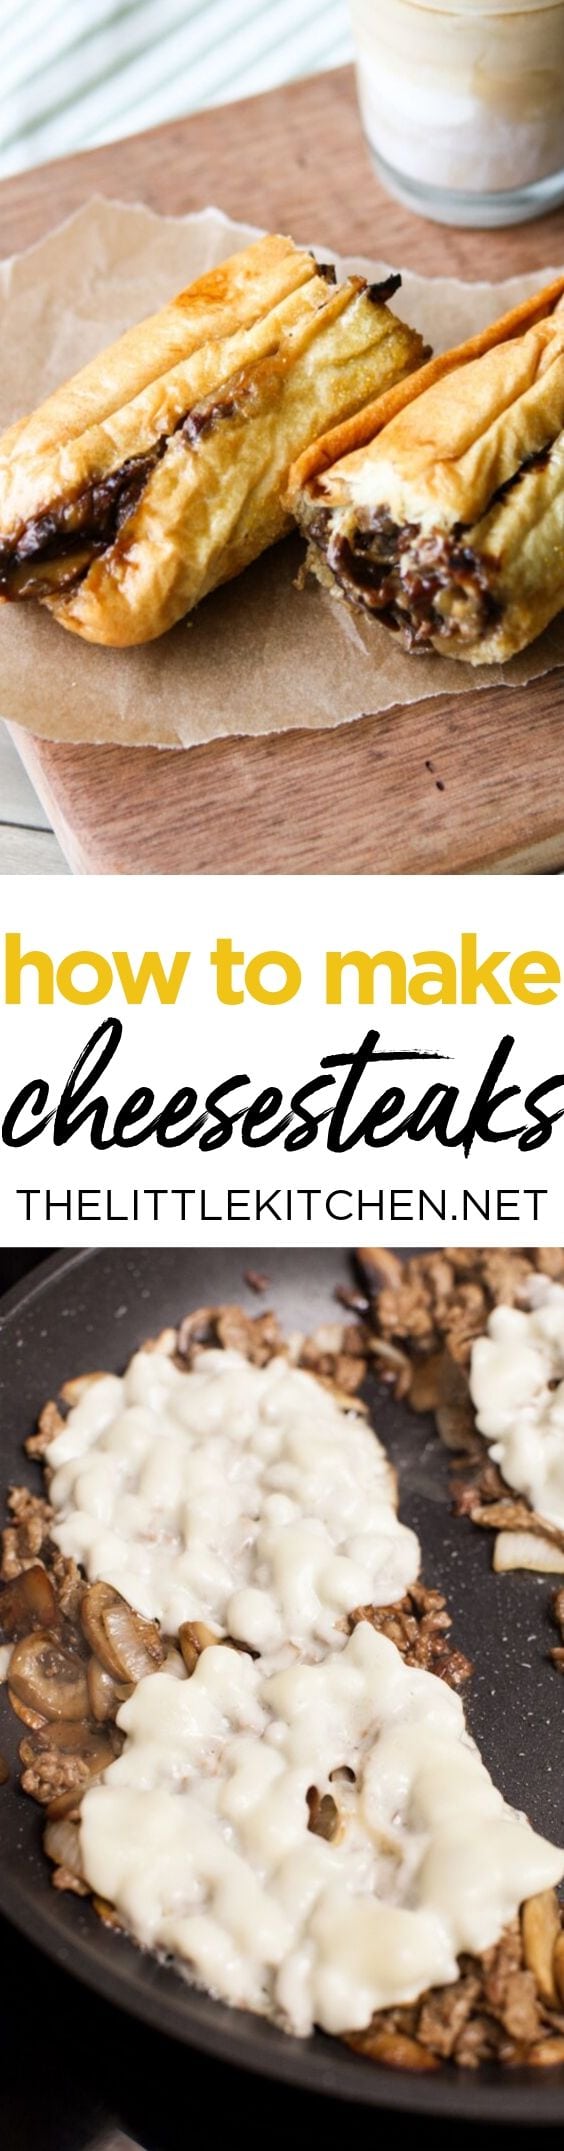 Cheesesteak Recipe from thelittlekitchen.net